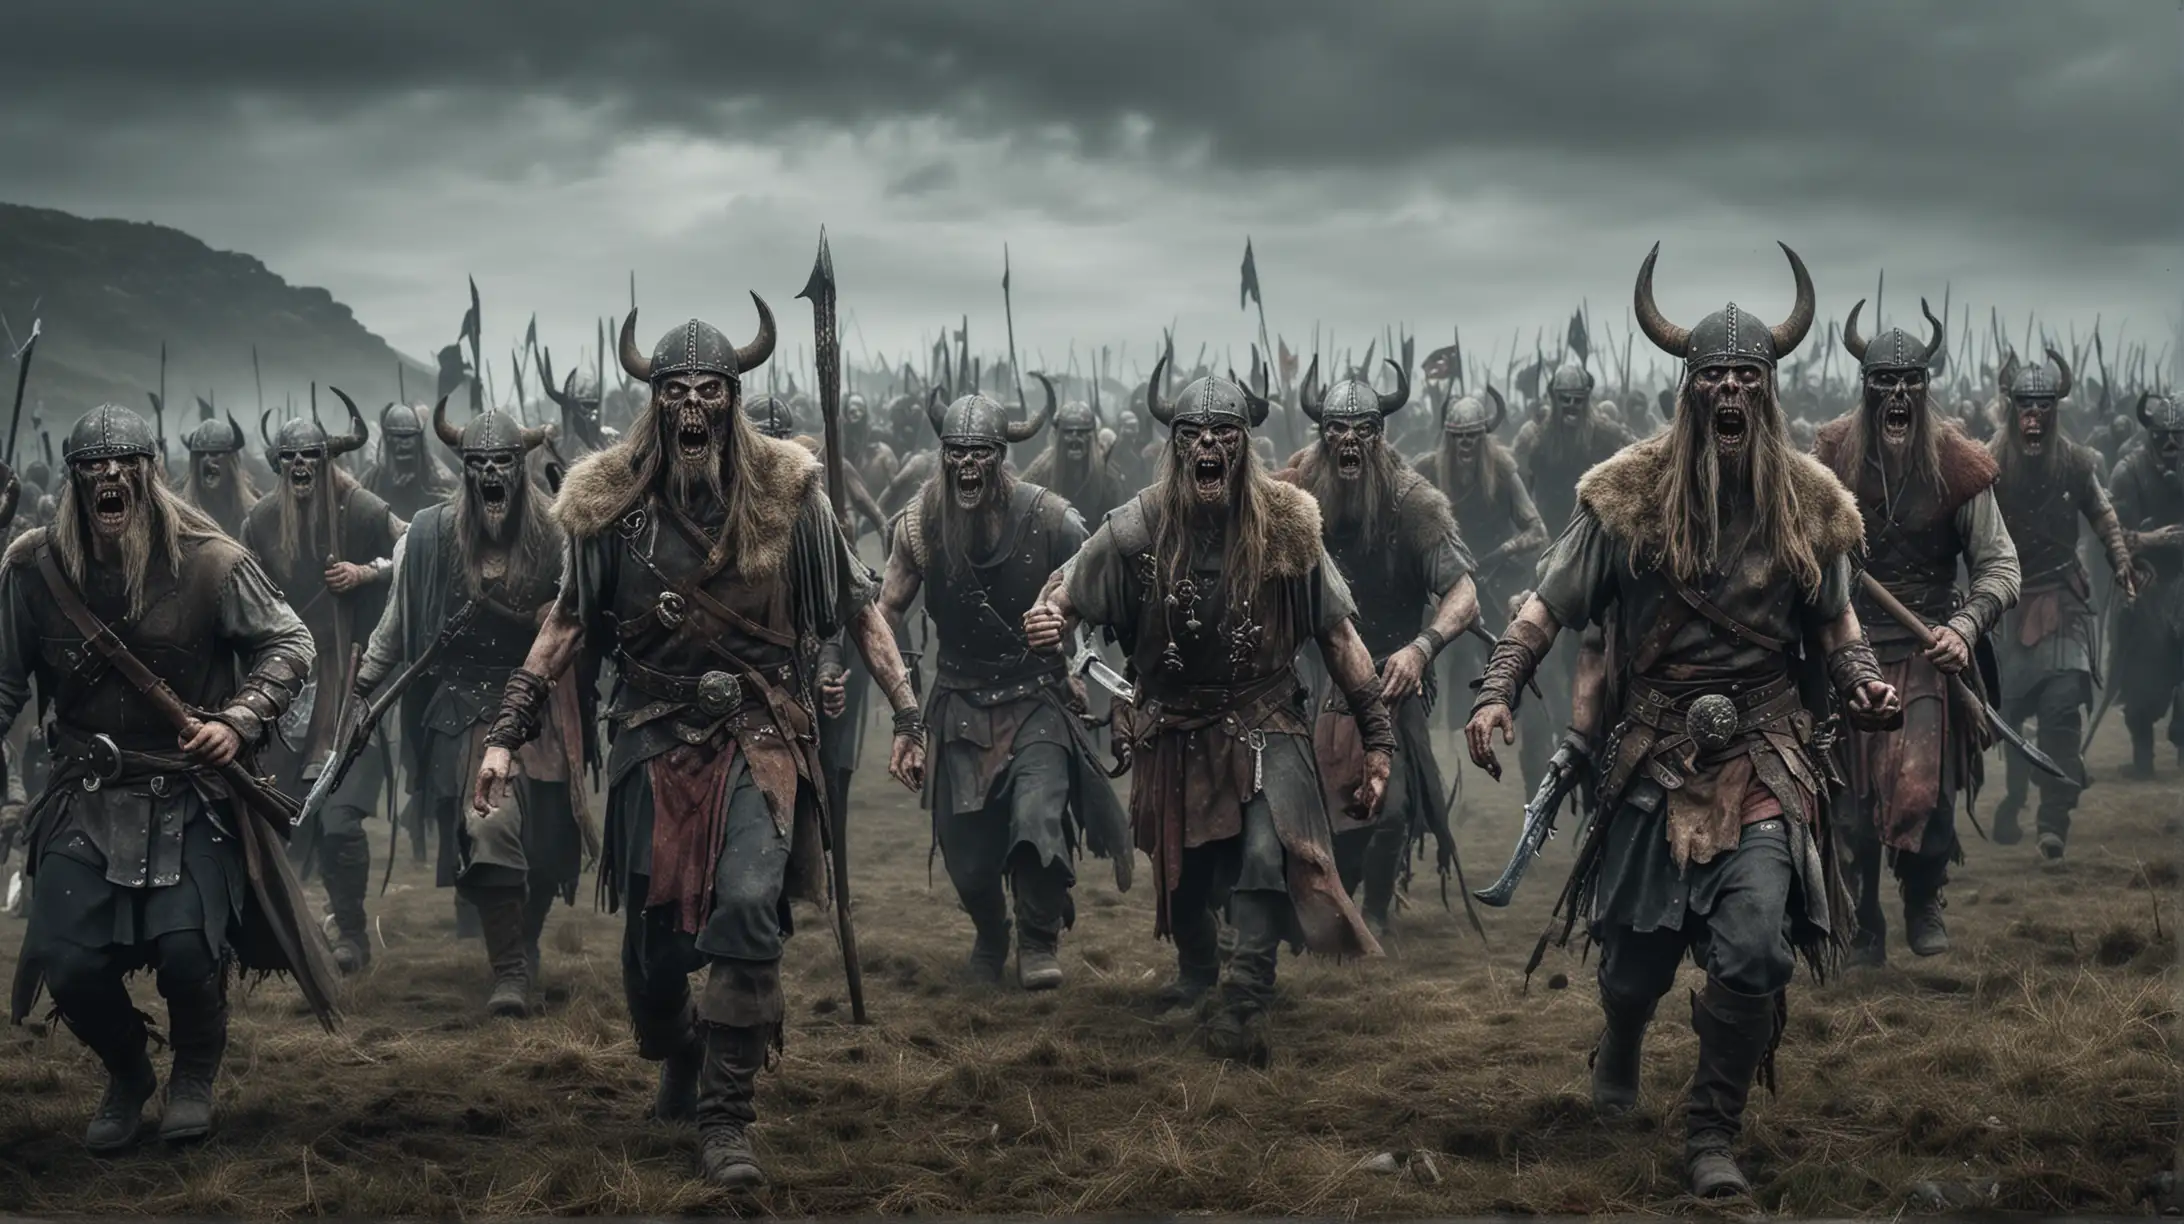 Grim Undead Zombie Horde Confronts Viking Warriors in Epic Battle